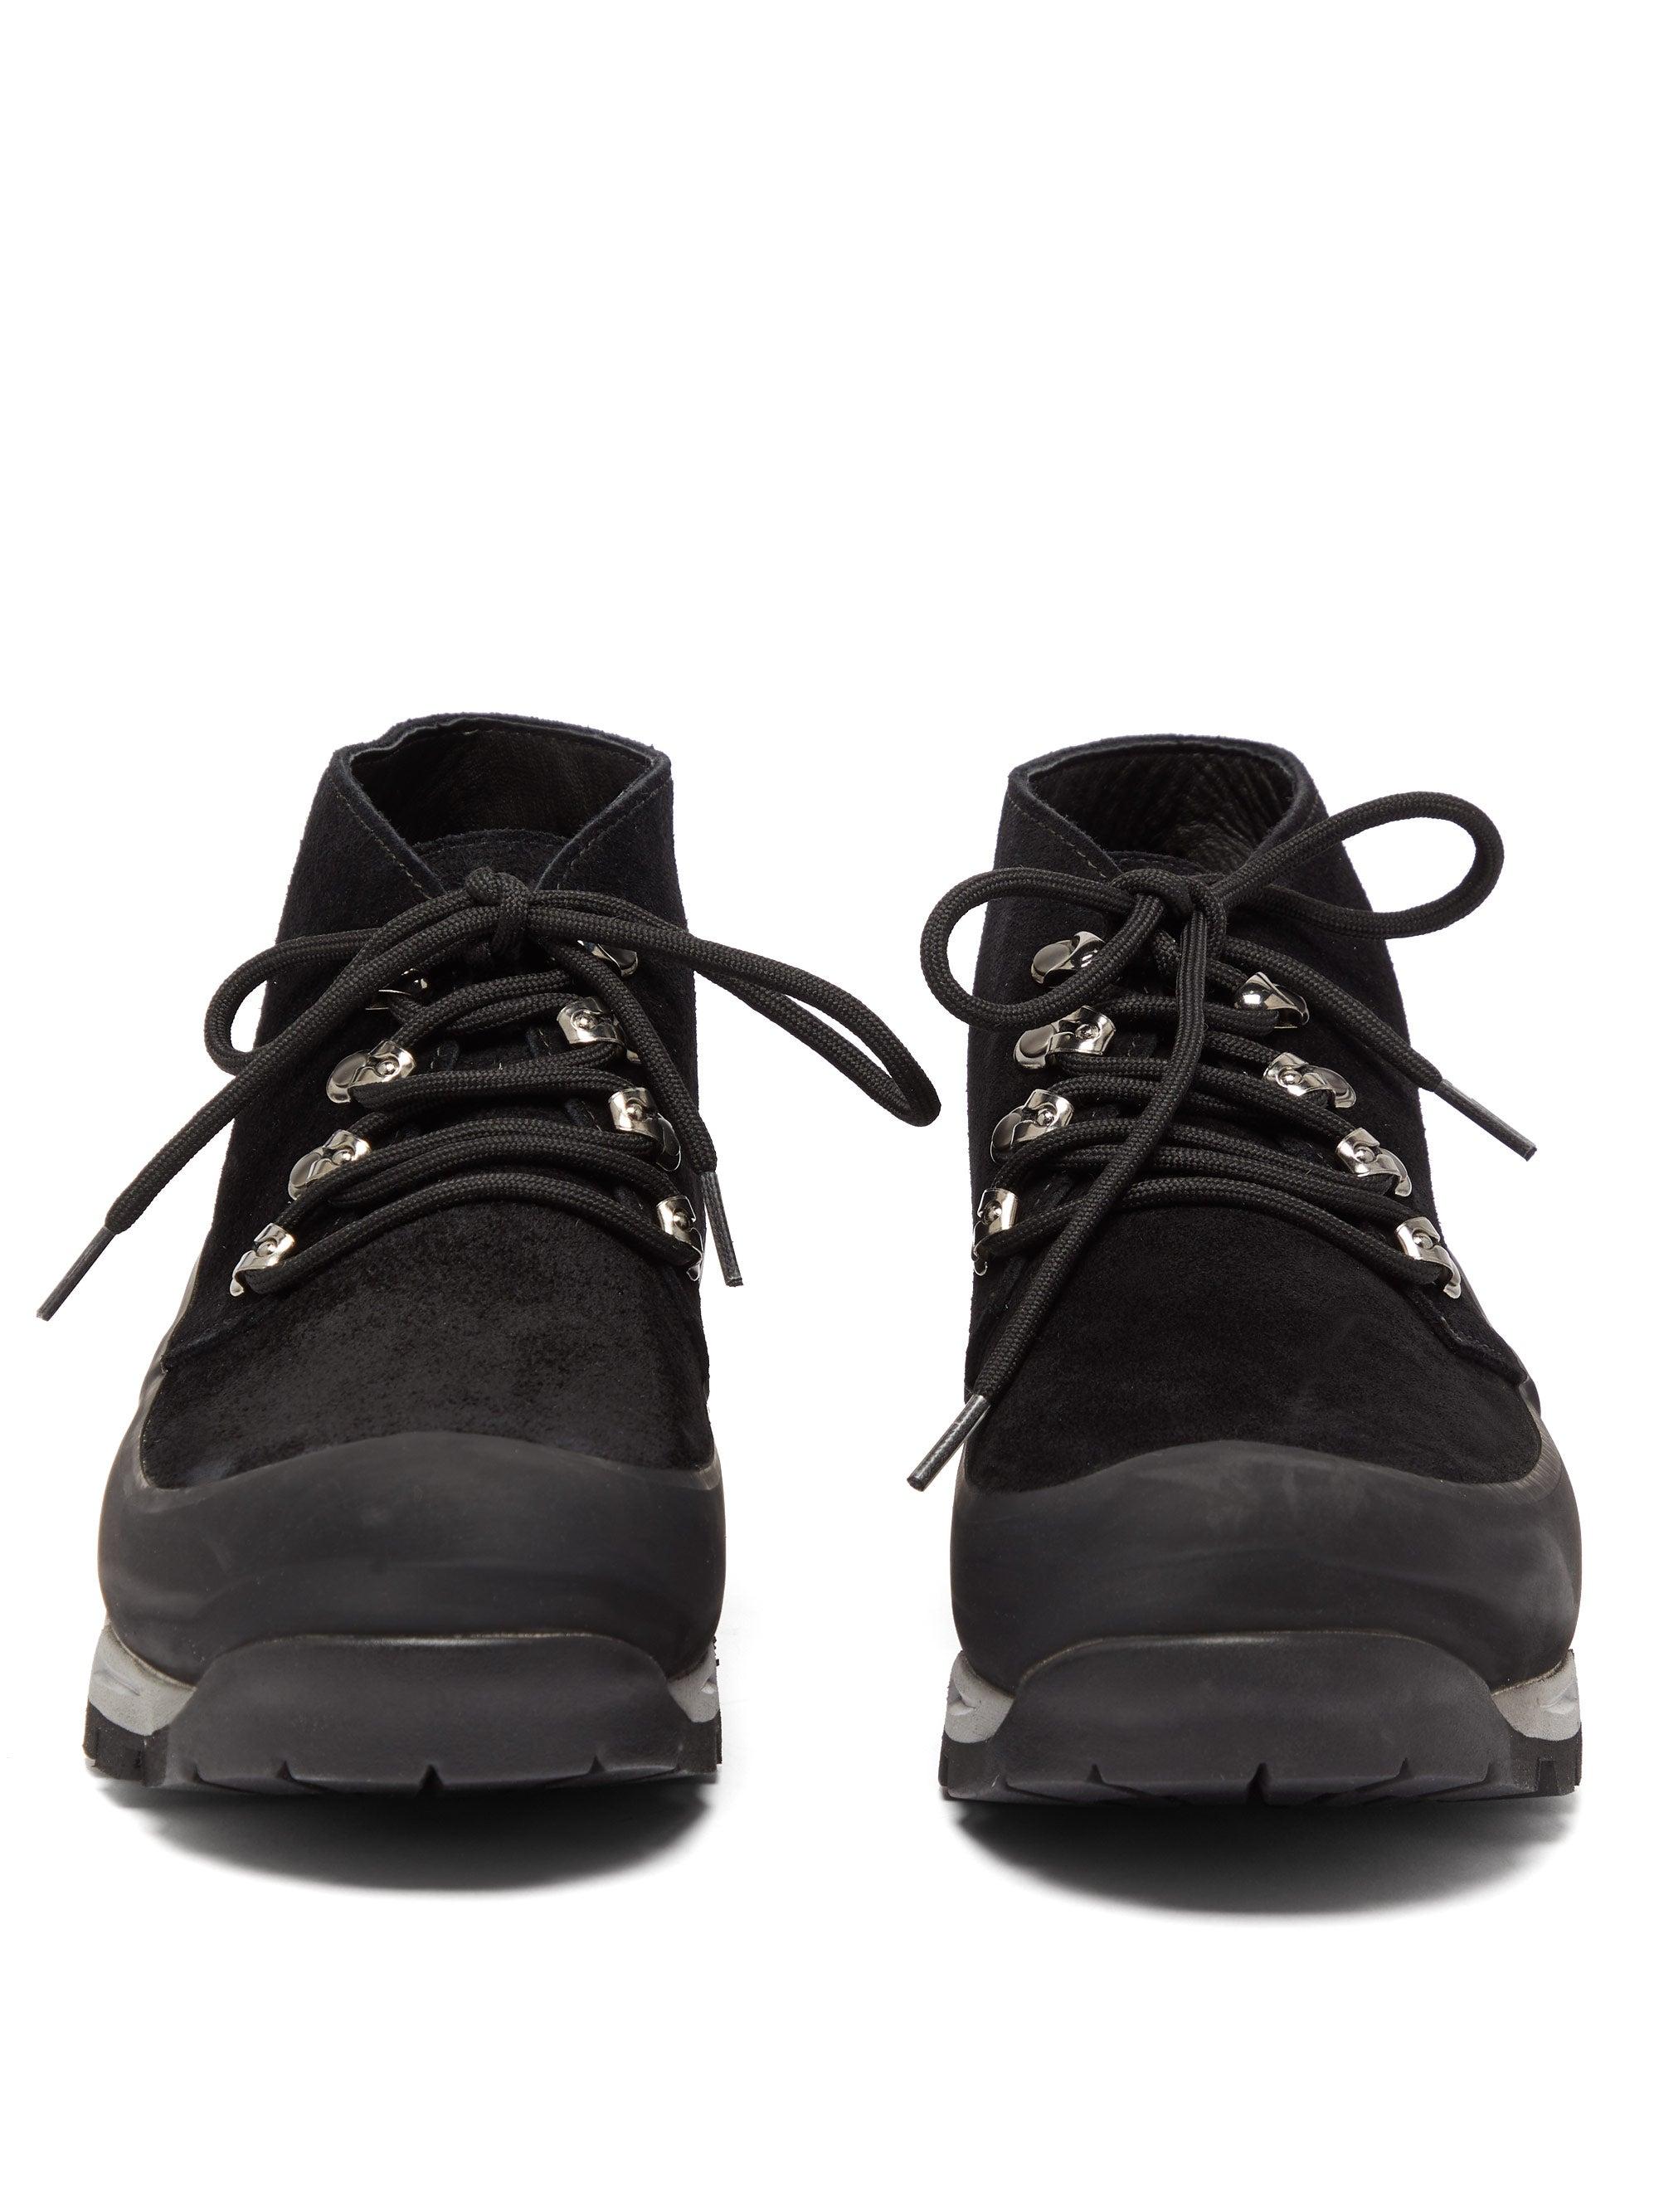 Diemme Asiago Vibram-sole Suede Boots in Black for Men - Lyst